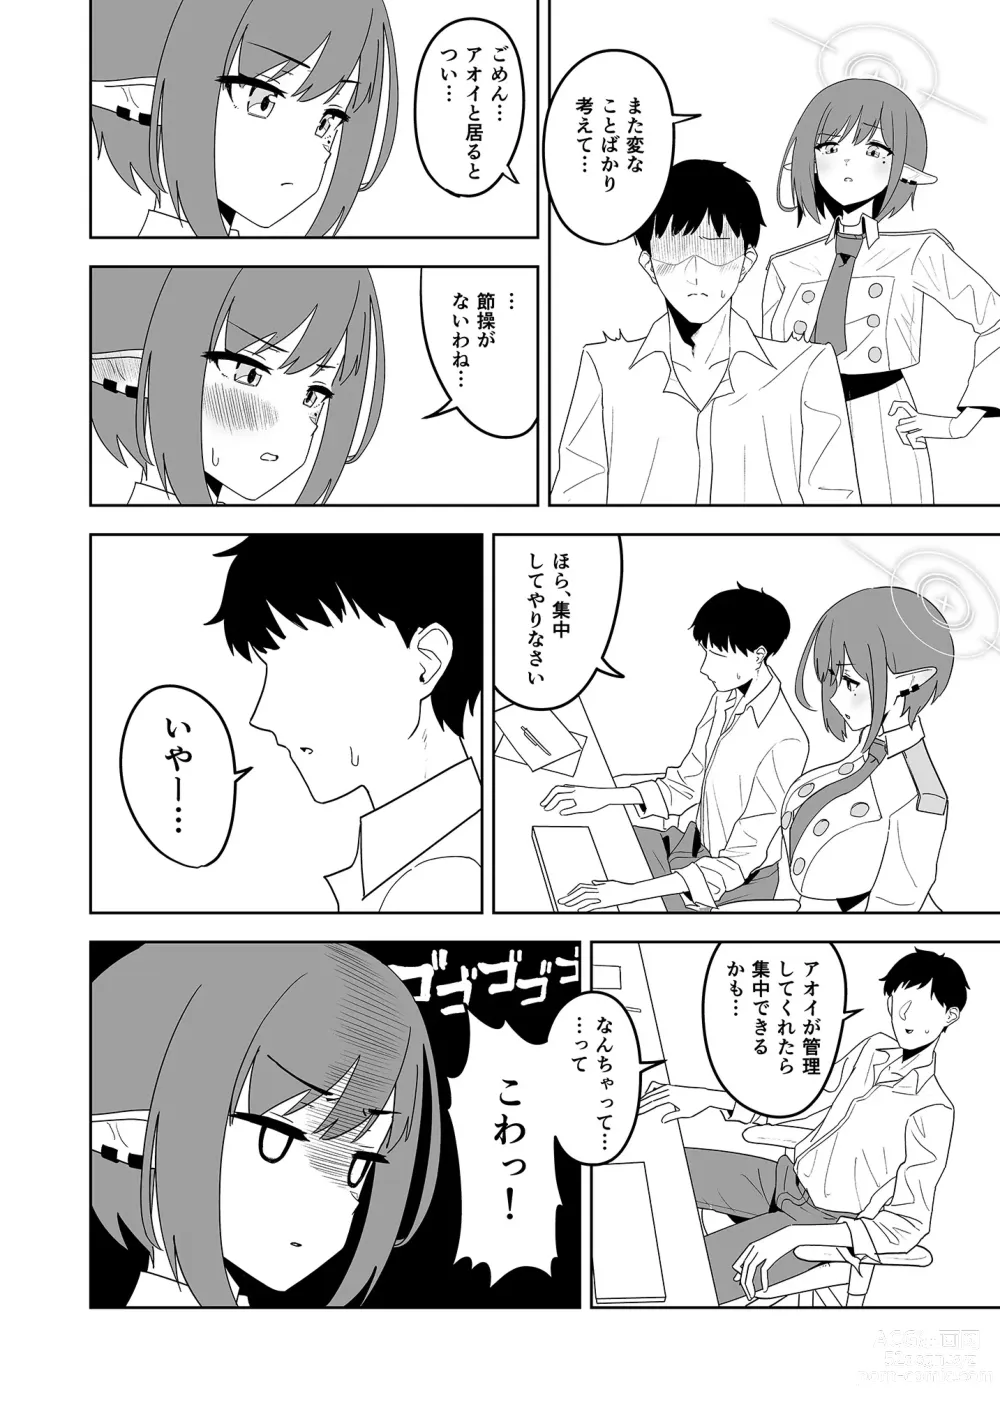 Page 3 of doujinshi Aoi ni Tekoki Shite Moraou - Lets Aoi give you a hand job.